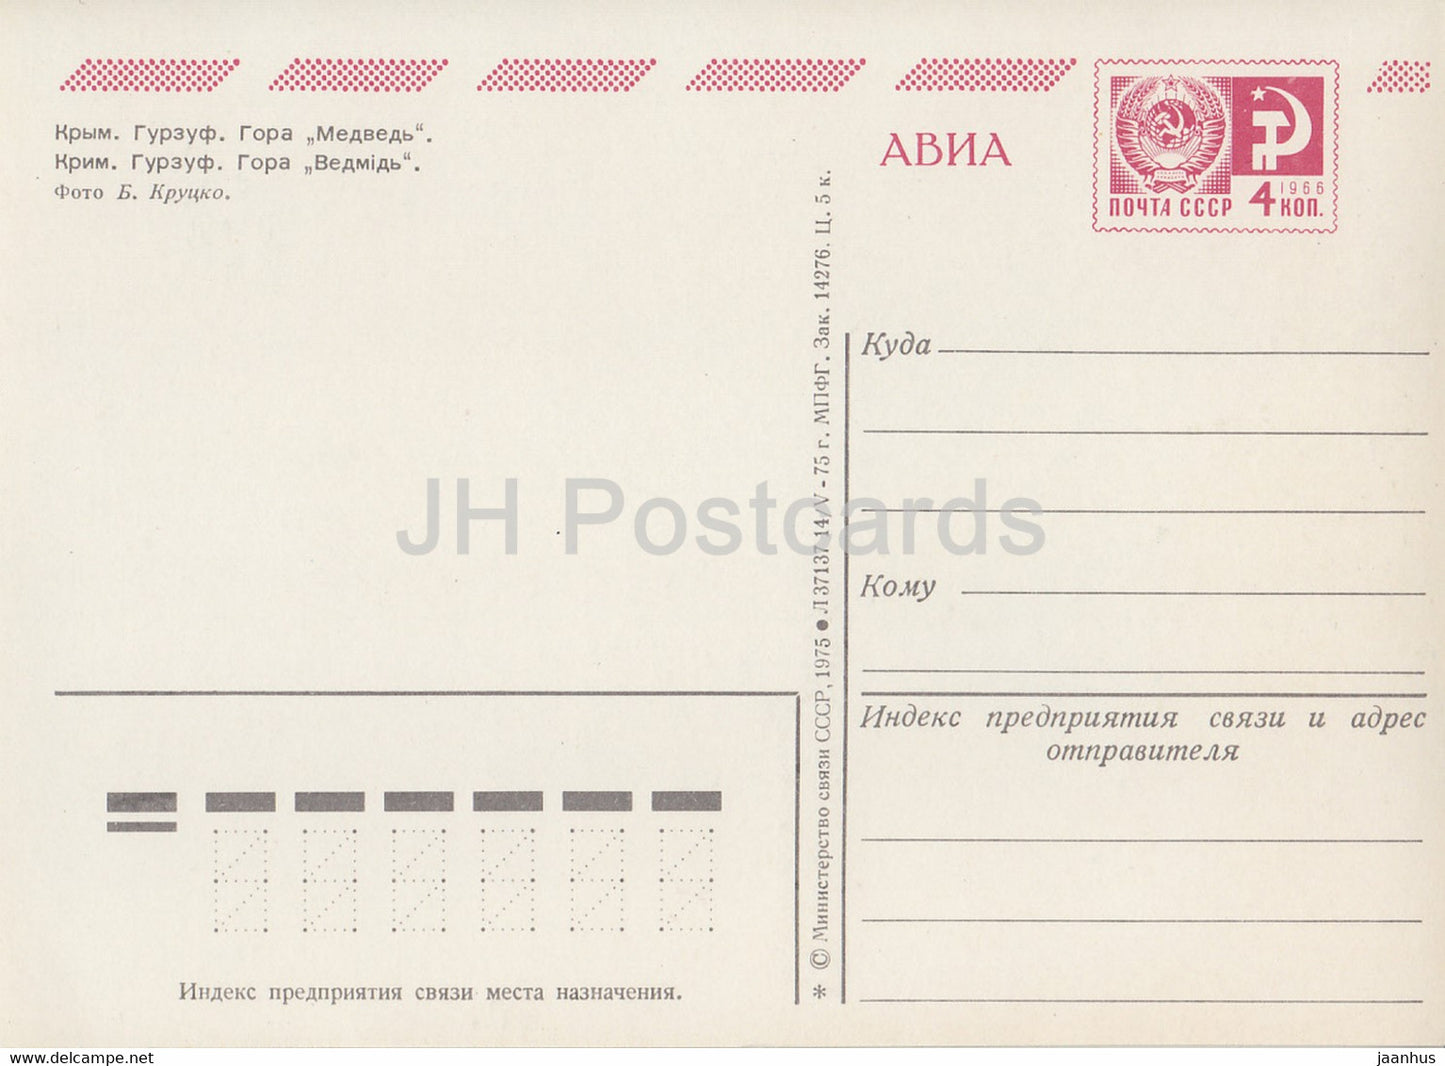 Crimée - Gurzuf - Montagne Medved (Ours) - AVIA - entier postal - 1975 - Ukraine URSS - inutilisé